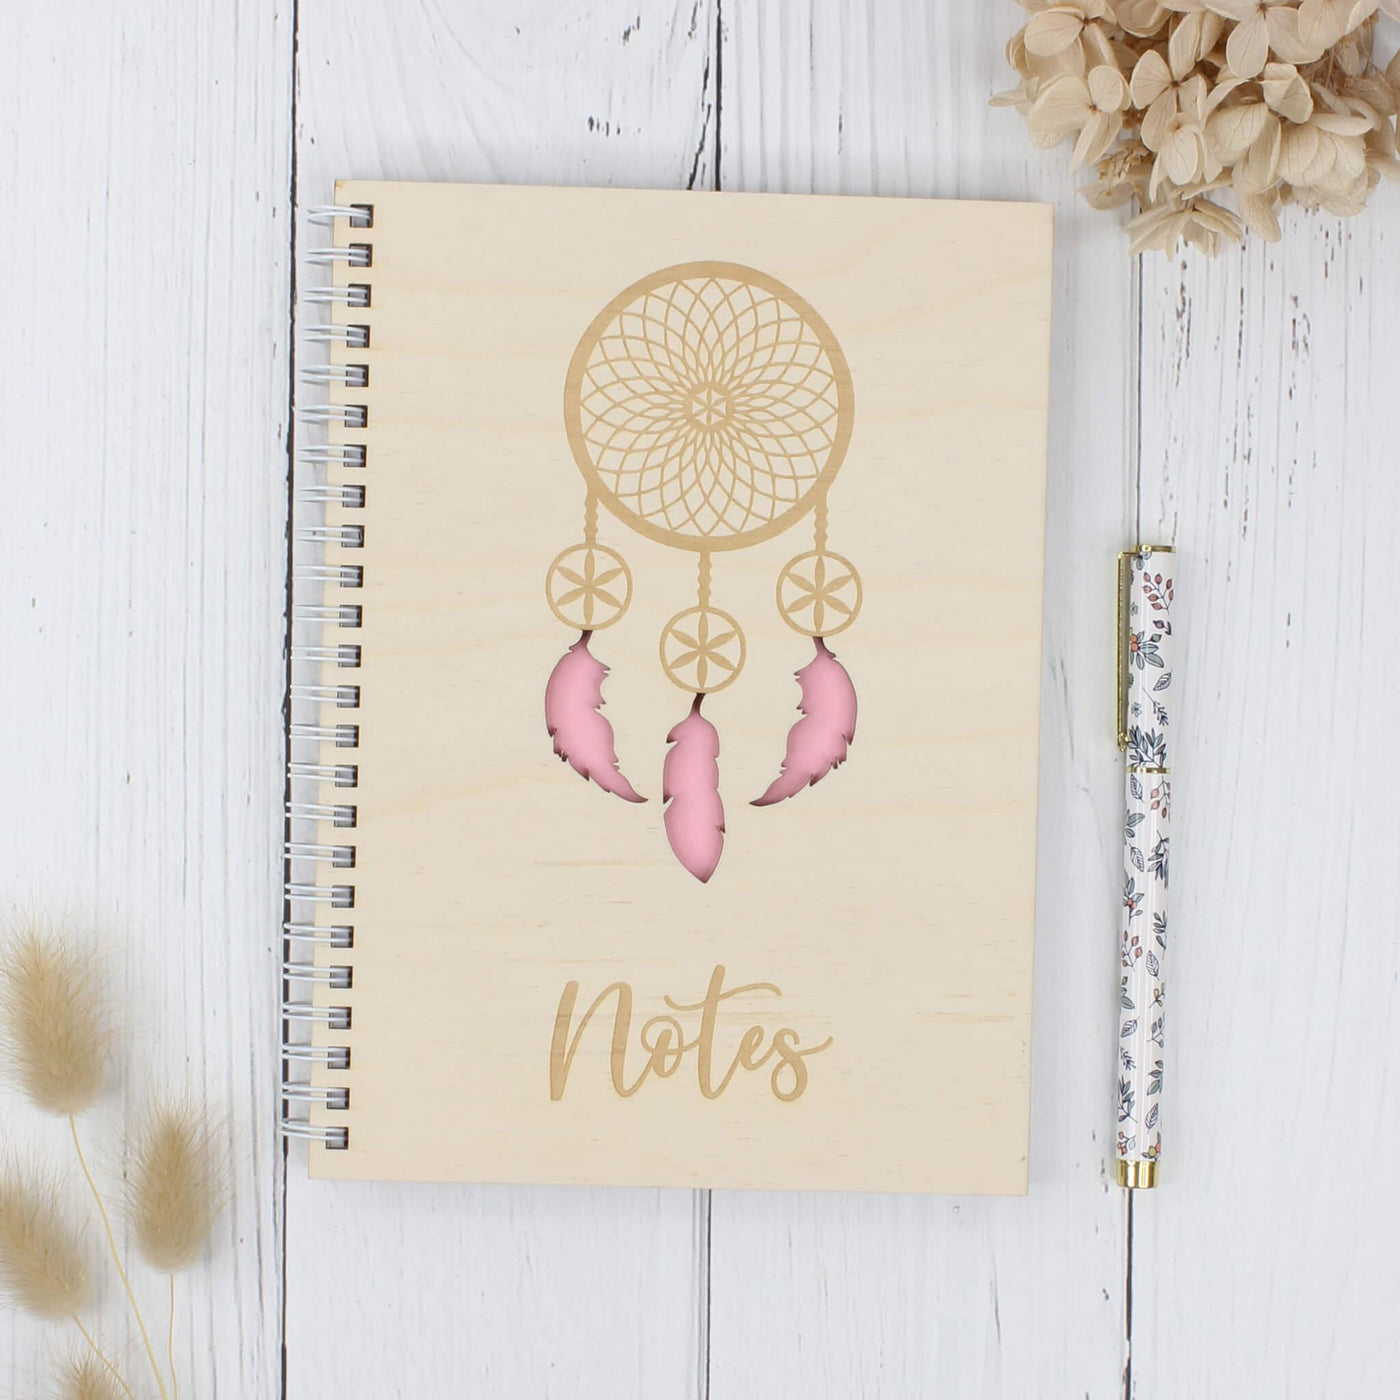 Personalised wooden notebook - dreamcatcher pink